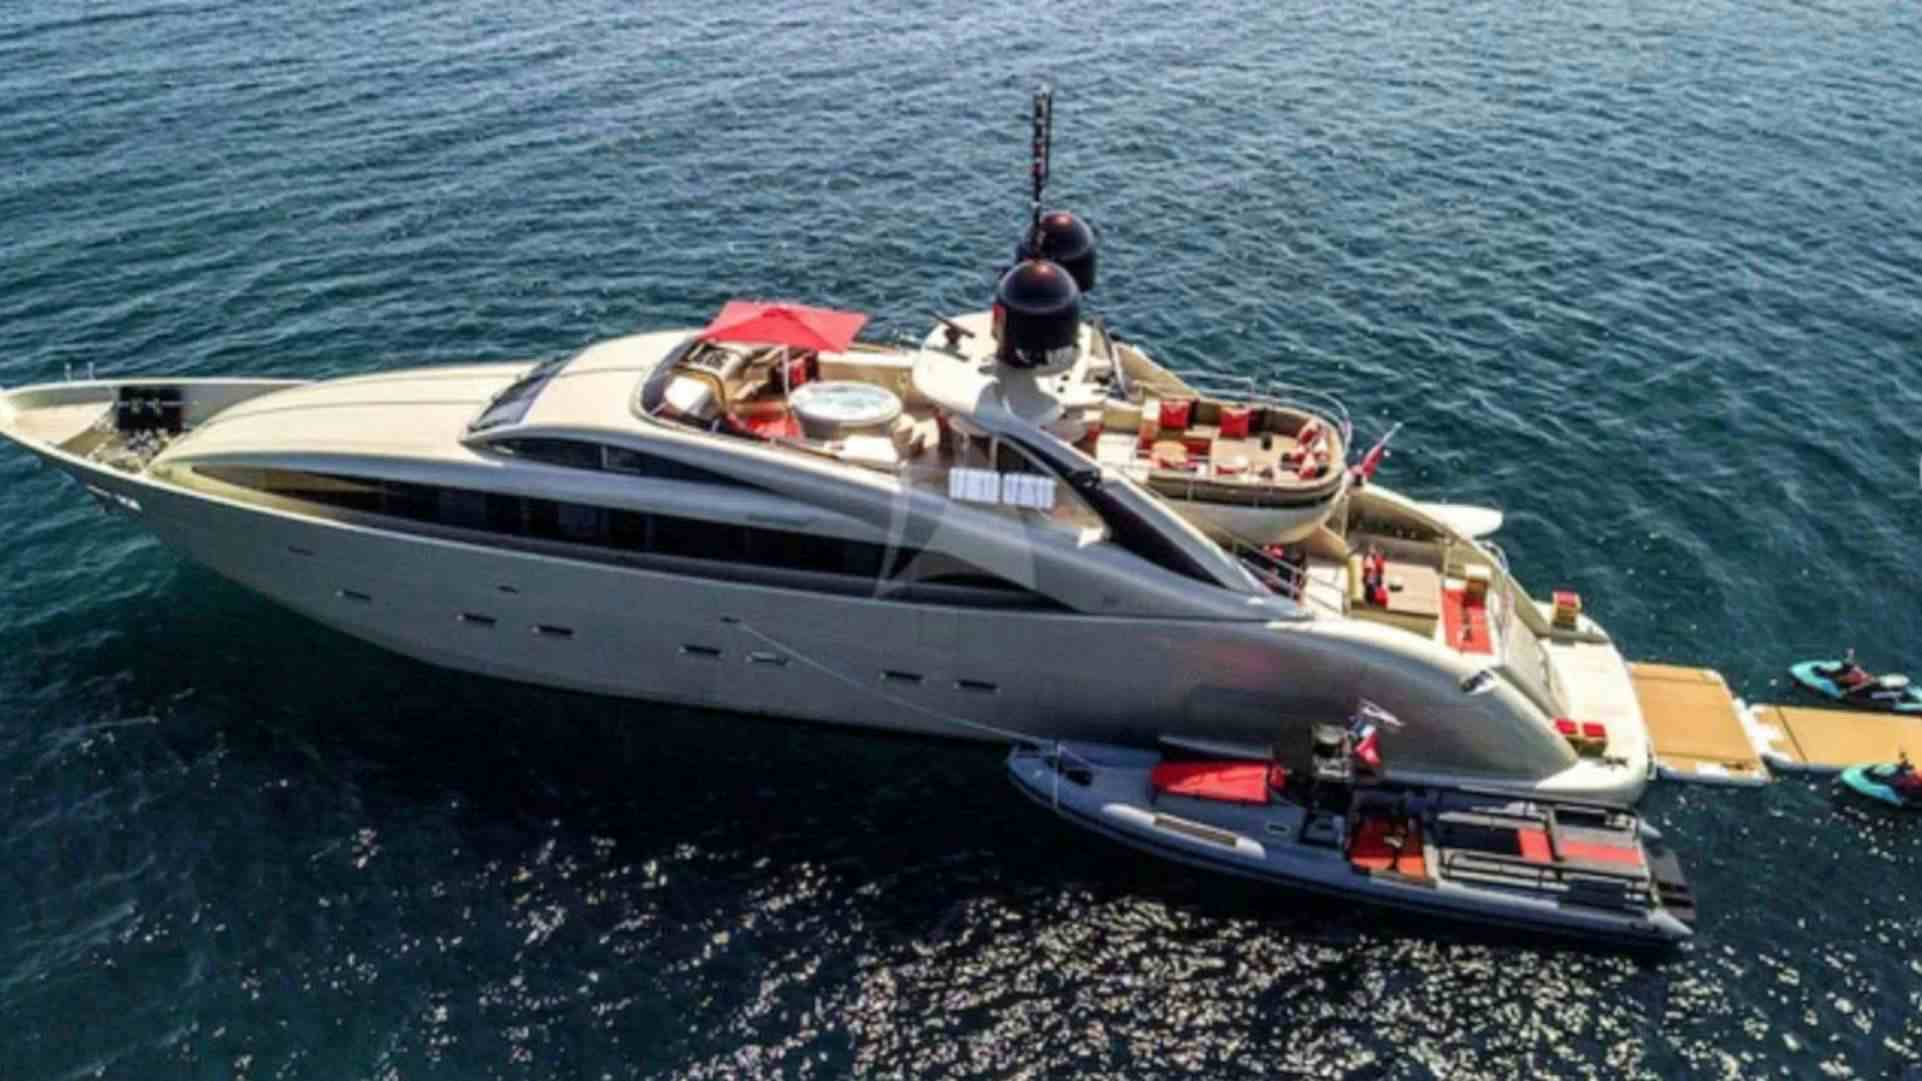 YCM 120 - Motor Boat Charter Italy & Boat hire in Riviera, Corsica, Sardinia, Spain, Balearics, Caribbean 1